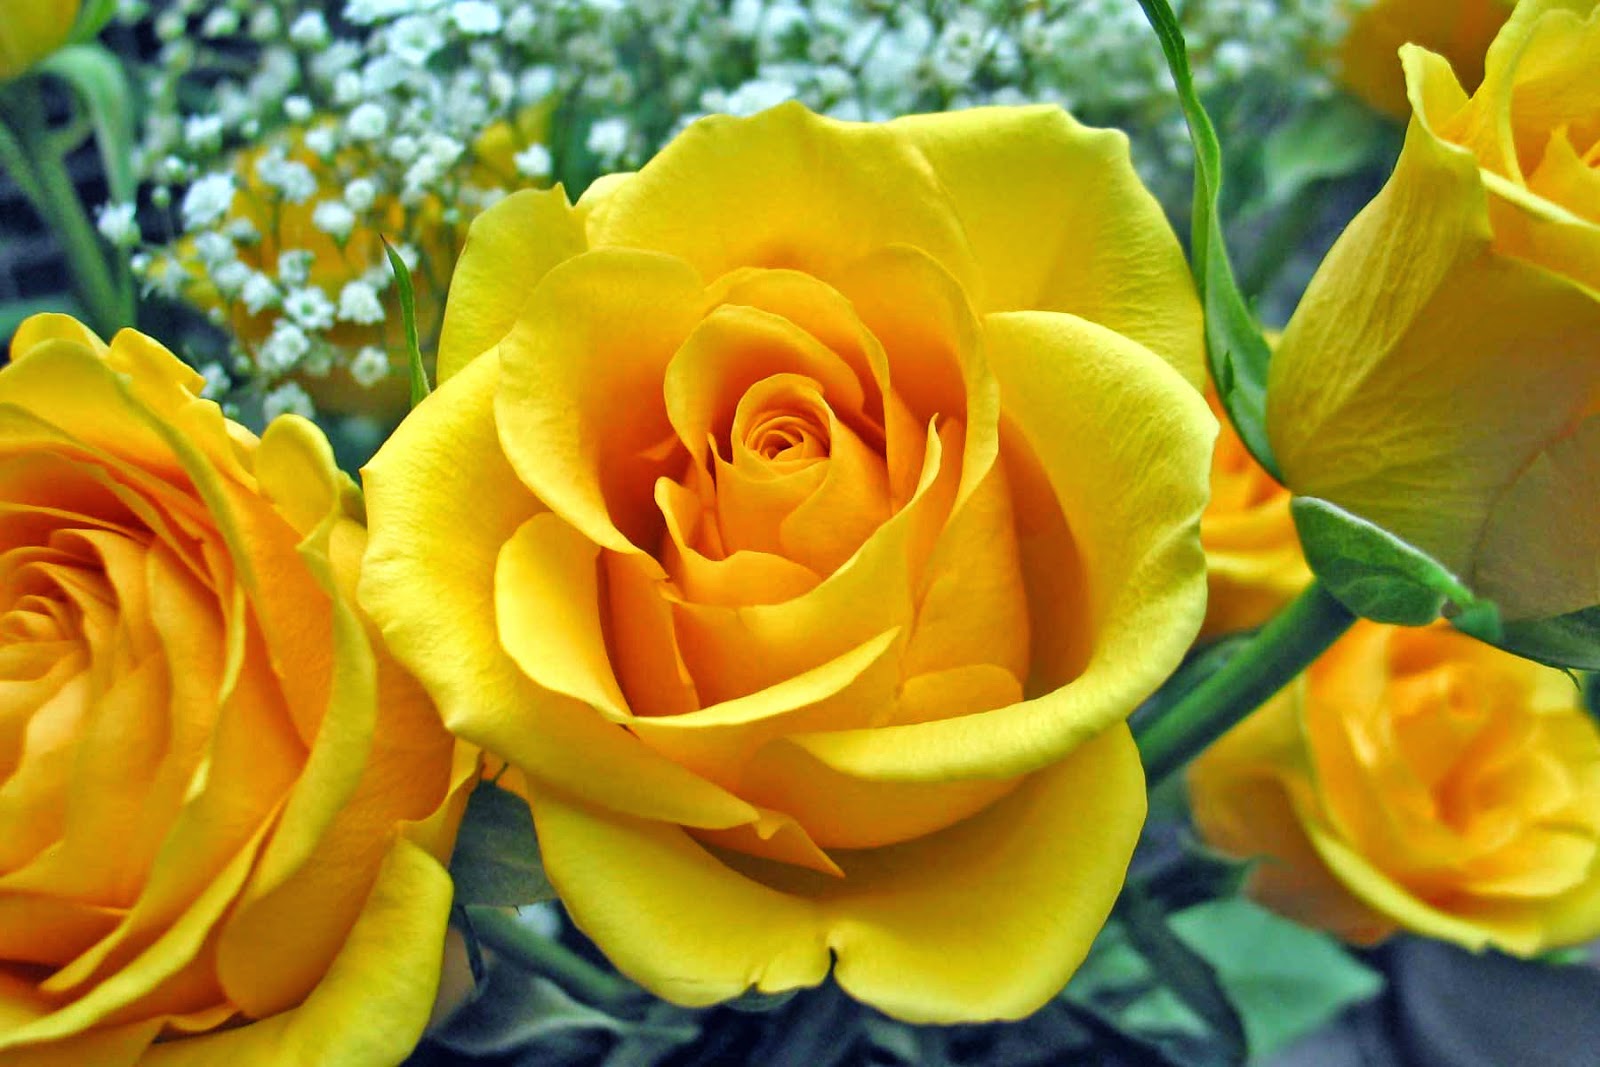 yellow rose flower in the garden